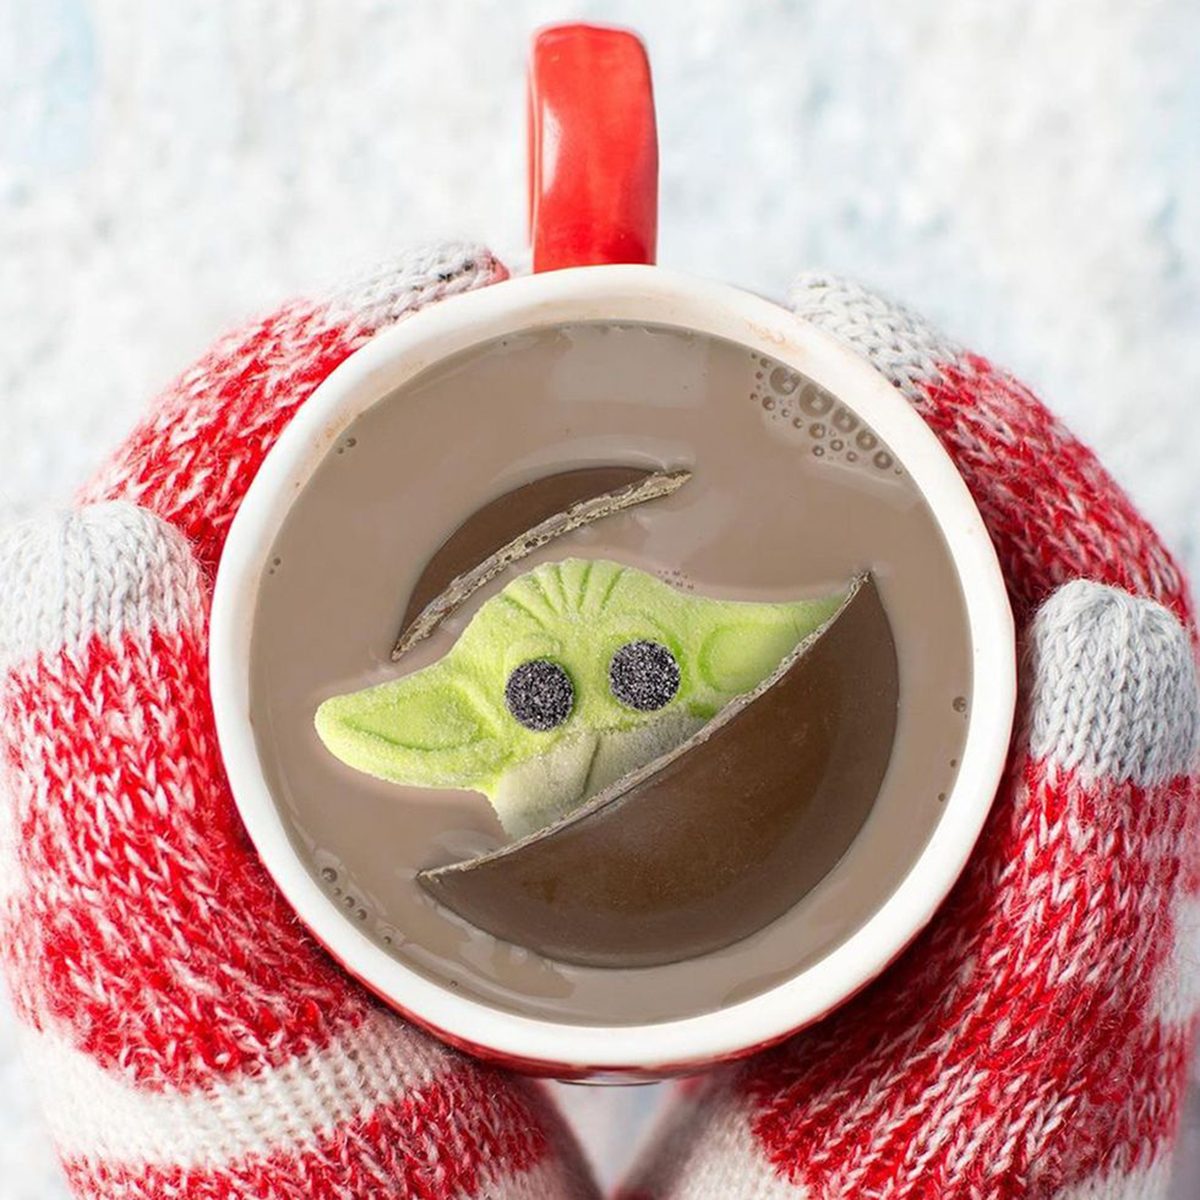 Washington Commanders Baby Yoda A Good Day Starts With Coffee Mug - Jolly  Family Gifts